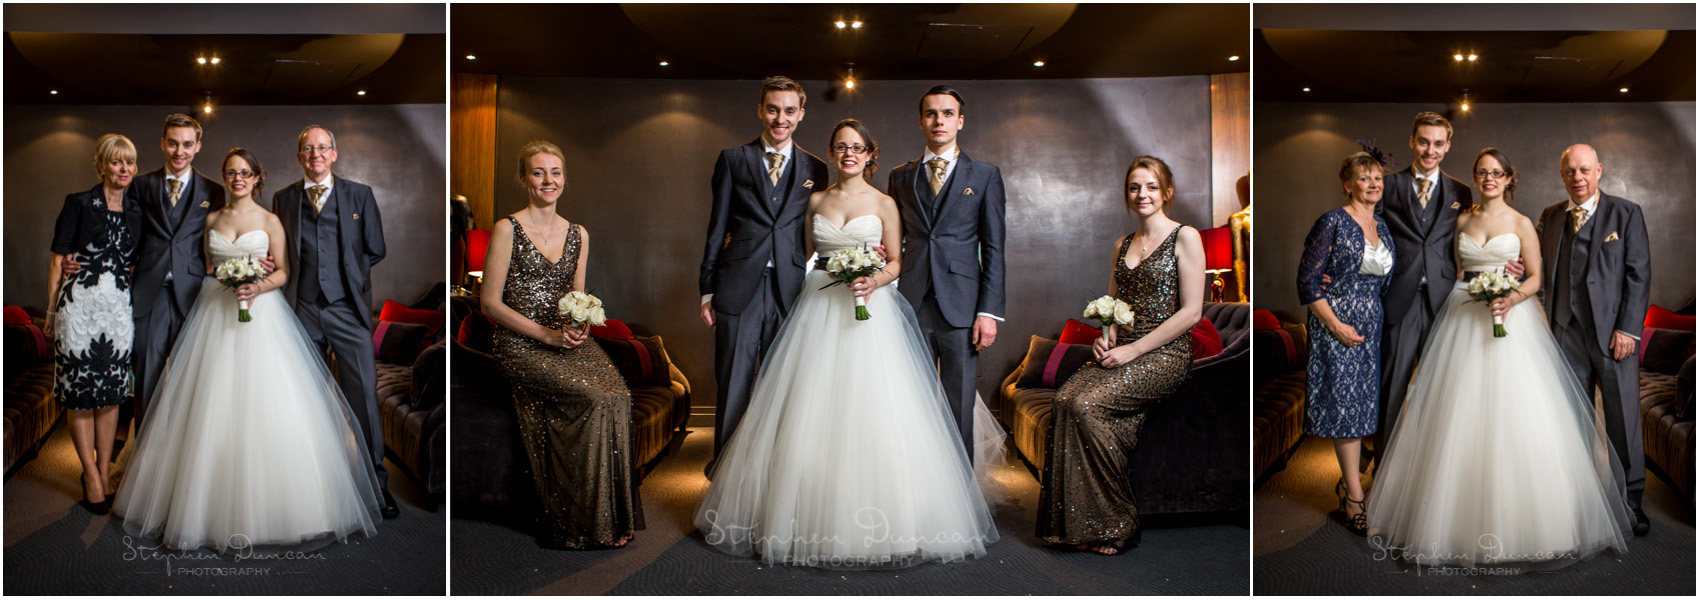 The Aviator wedding photography group photos indoors